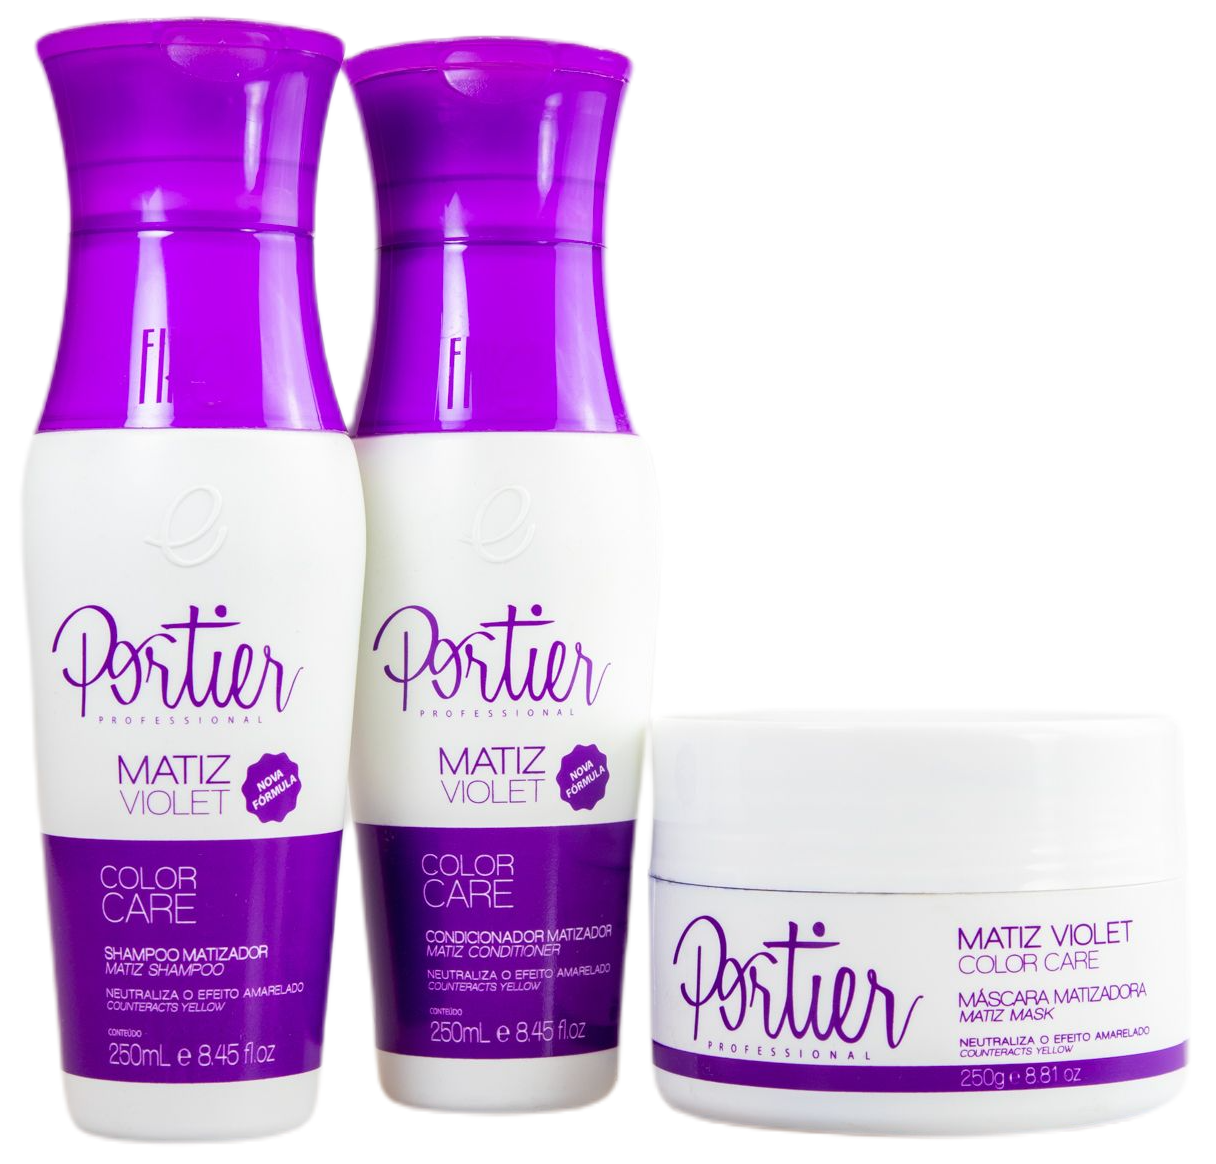 Portier Home Care Color Care Matiz Violet Kit 3 Products - Portier